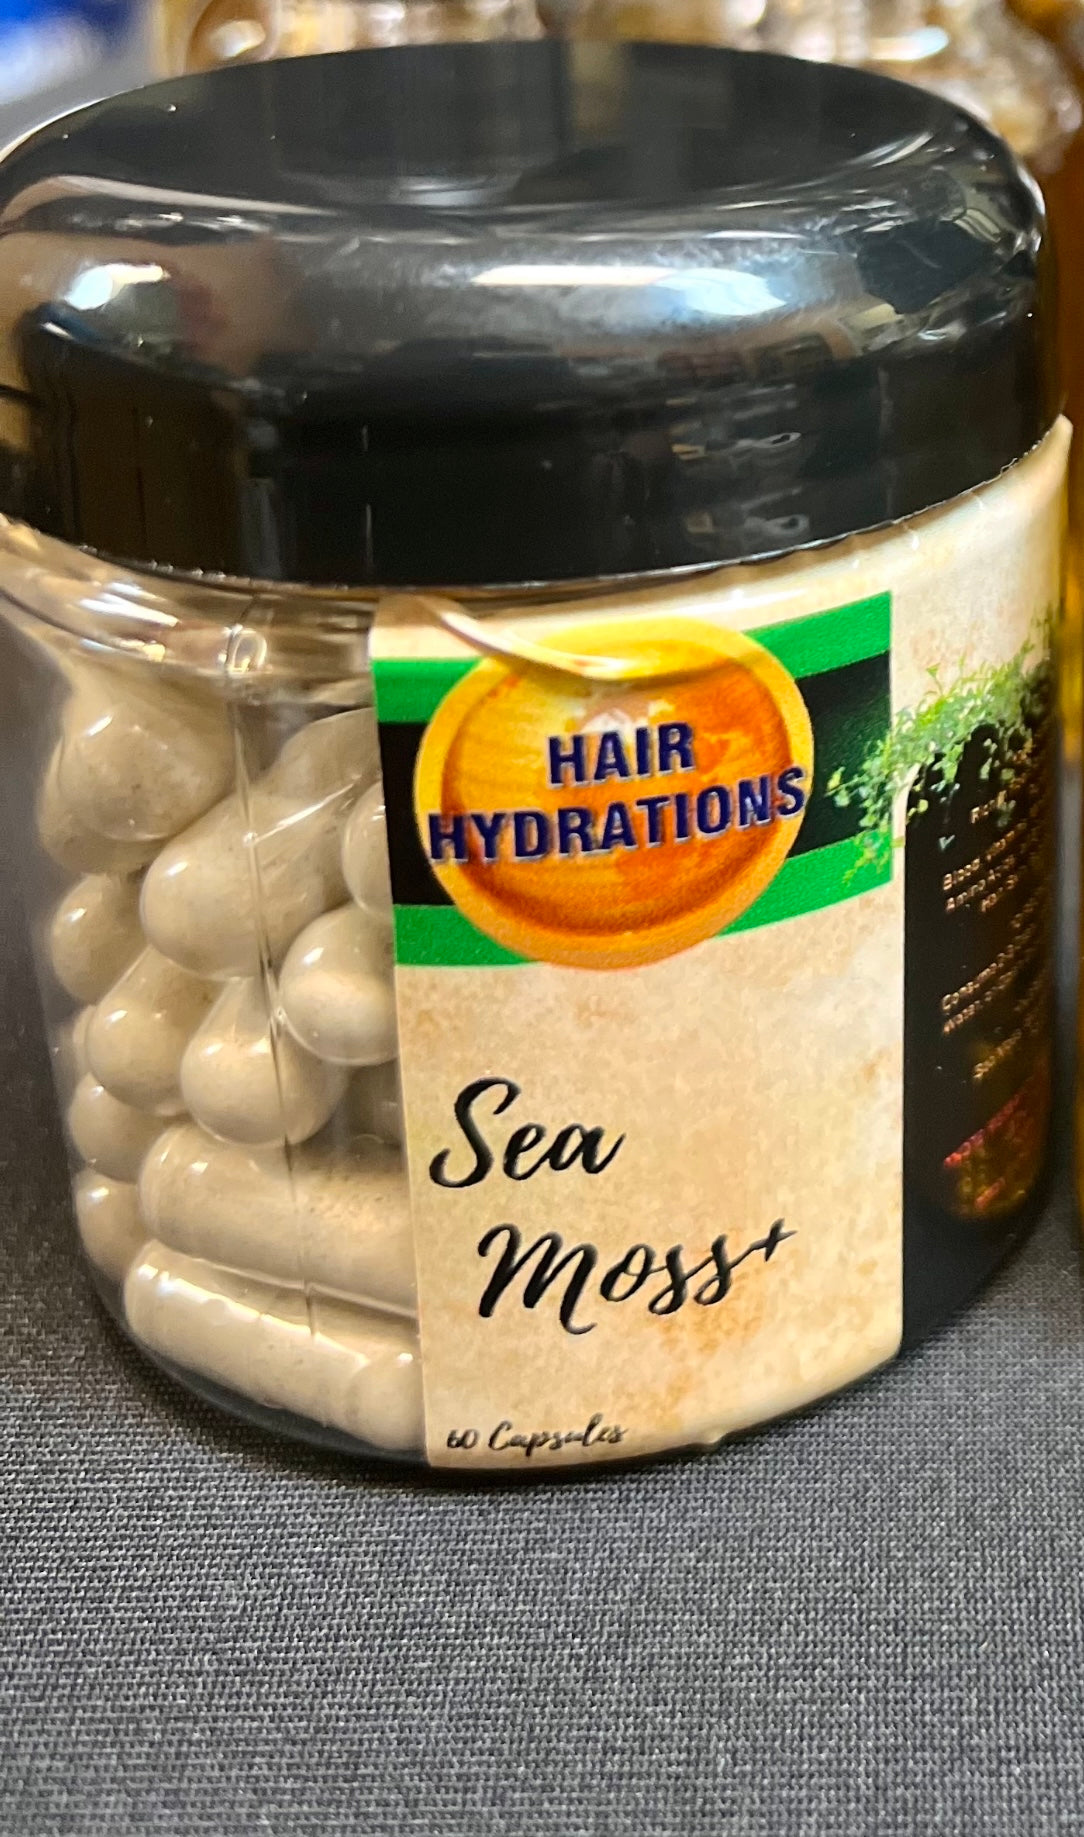 Hair Hydrations Sea Moss+